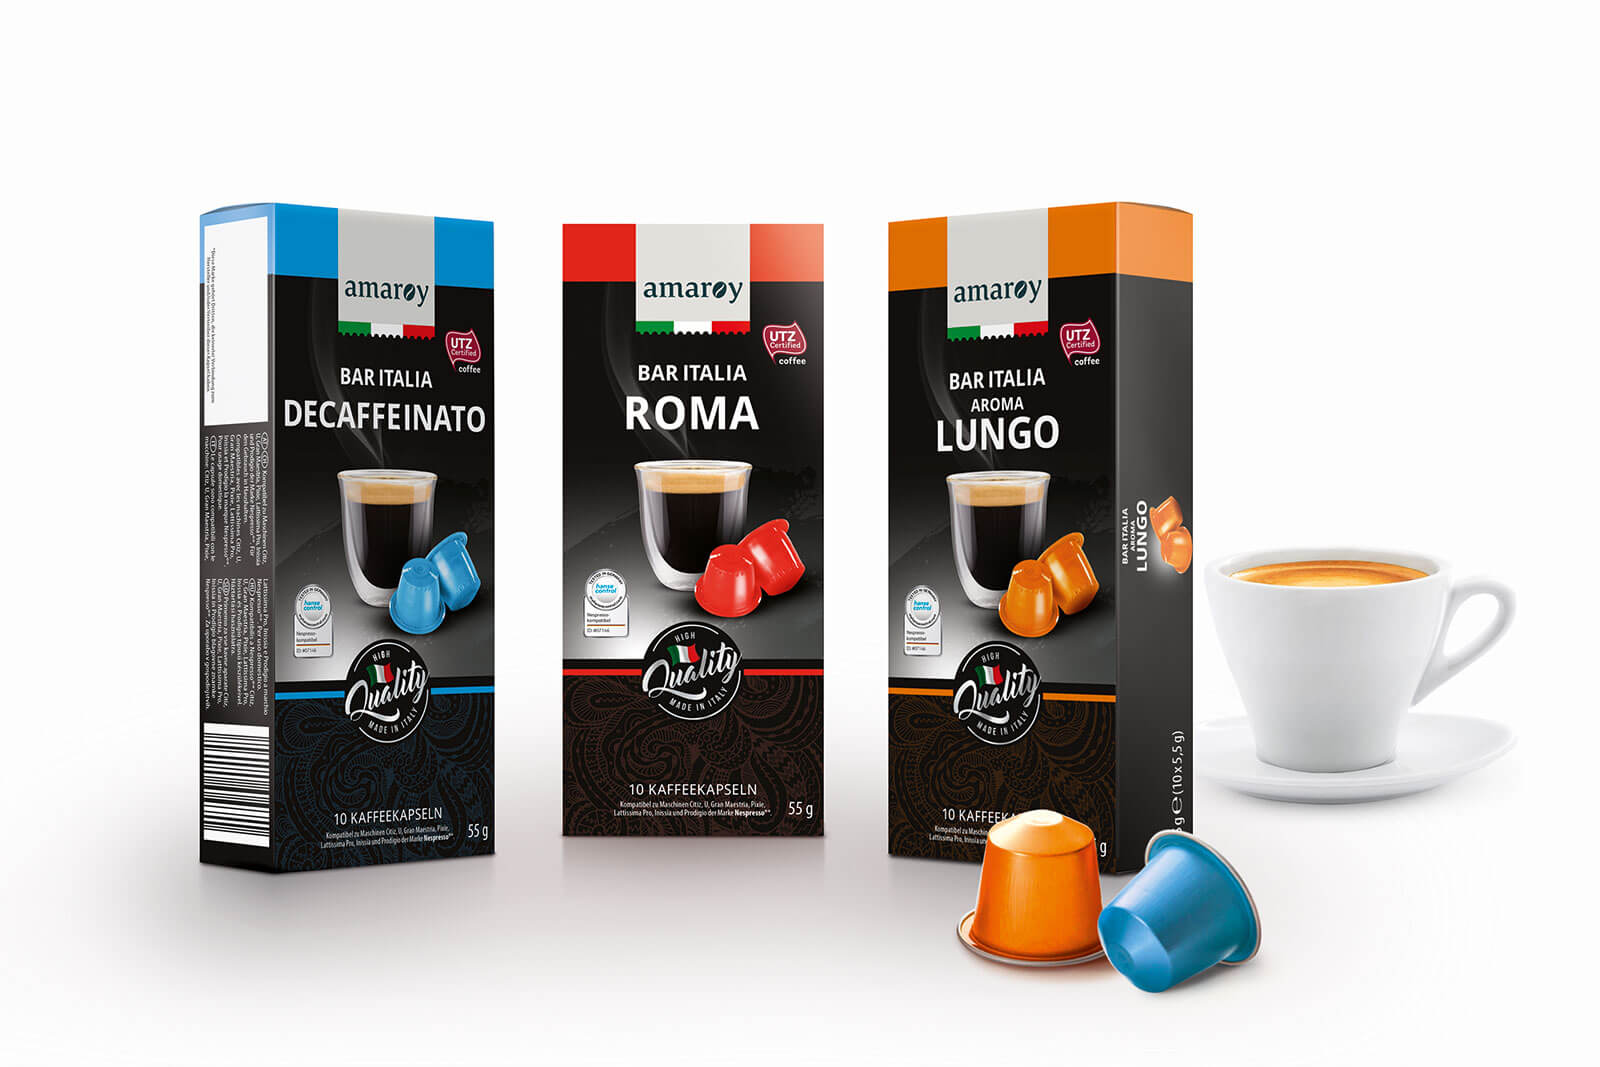 hofer amaroy kaffee kapseln bar italia roma lungo decaffeinato design packaging rubicon